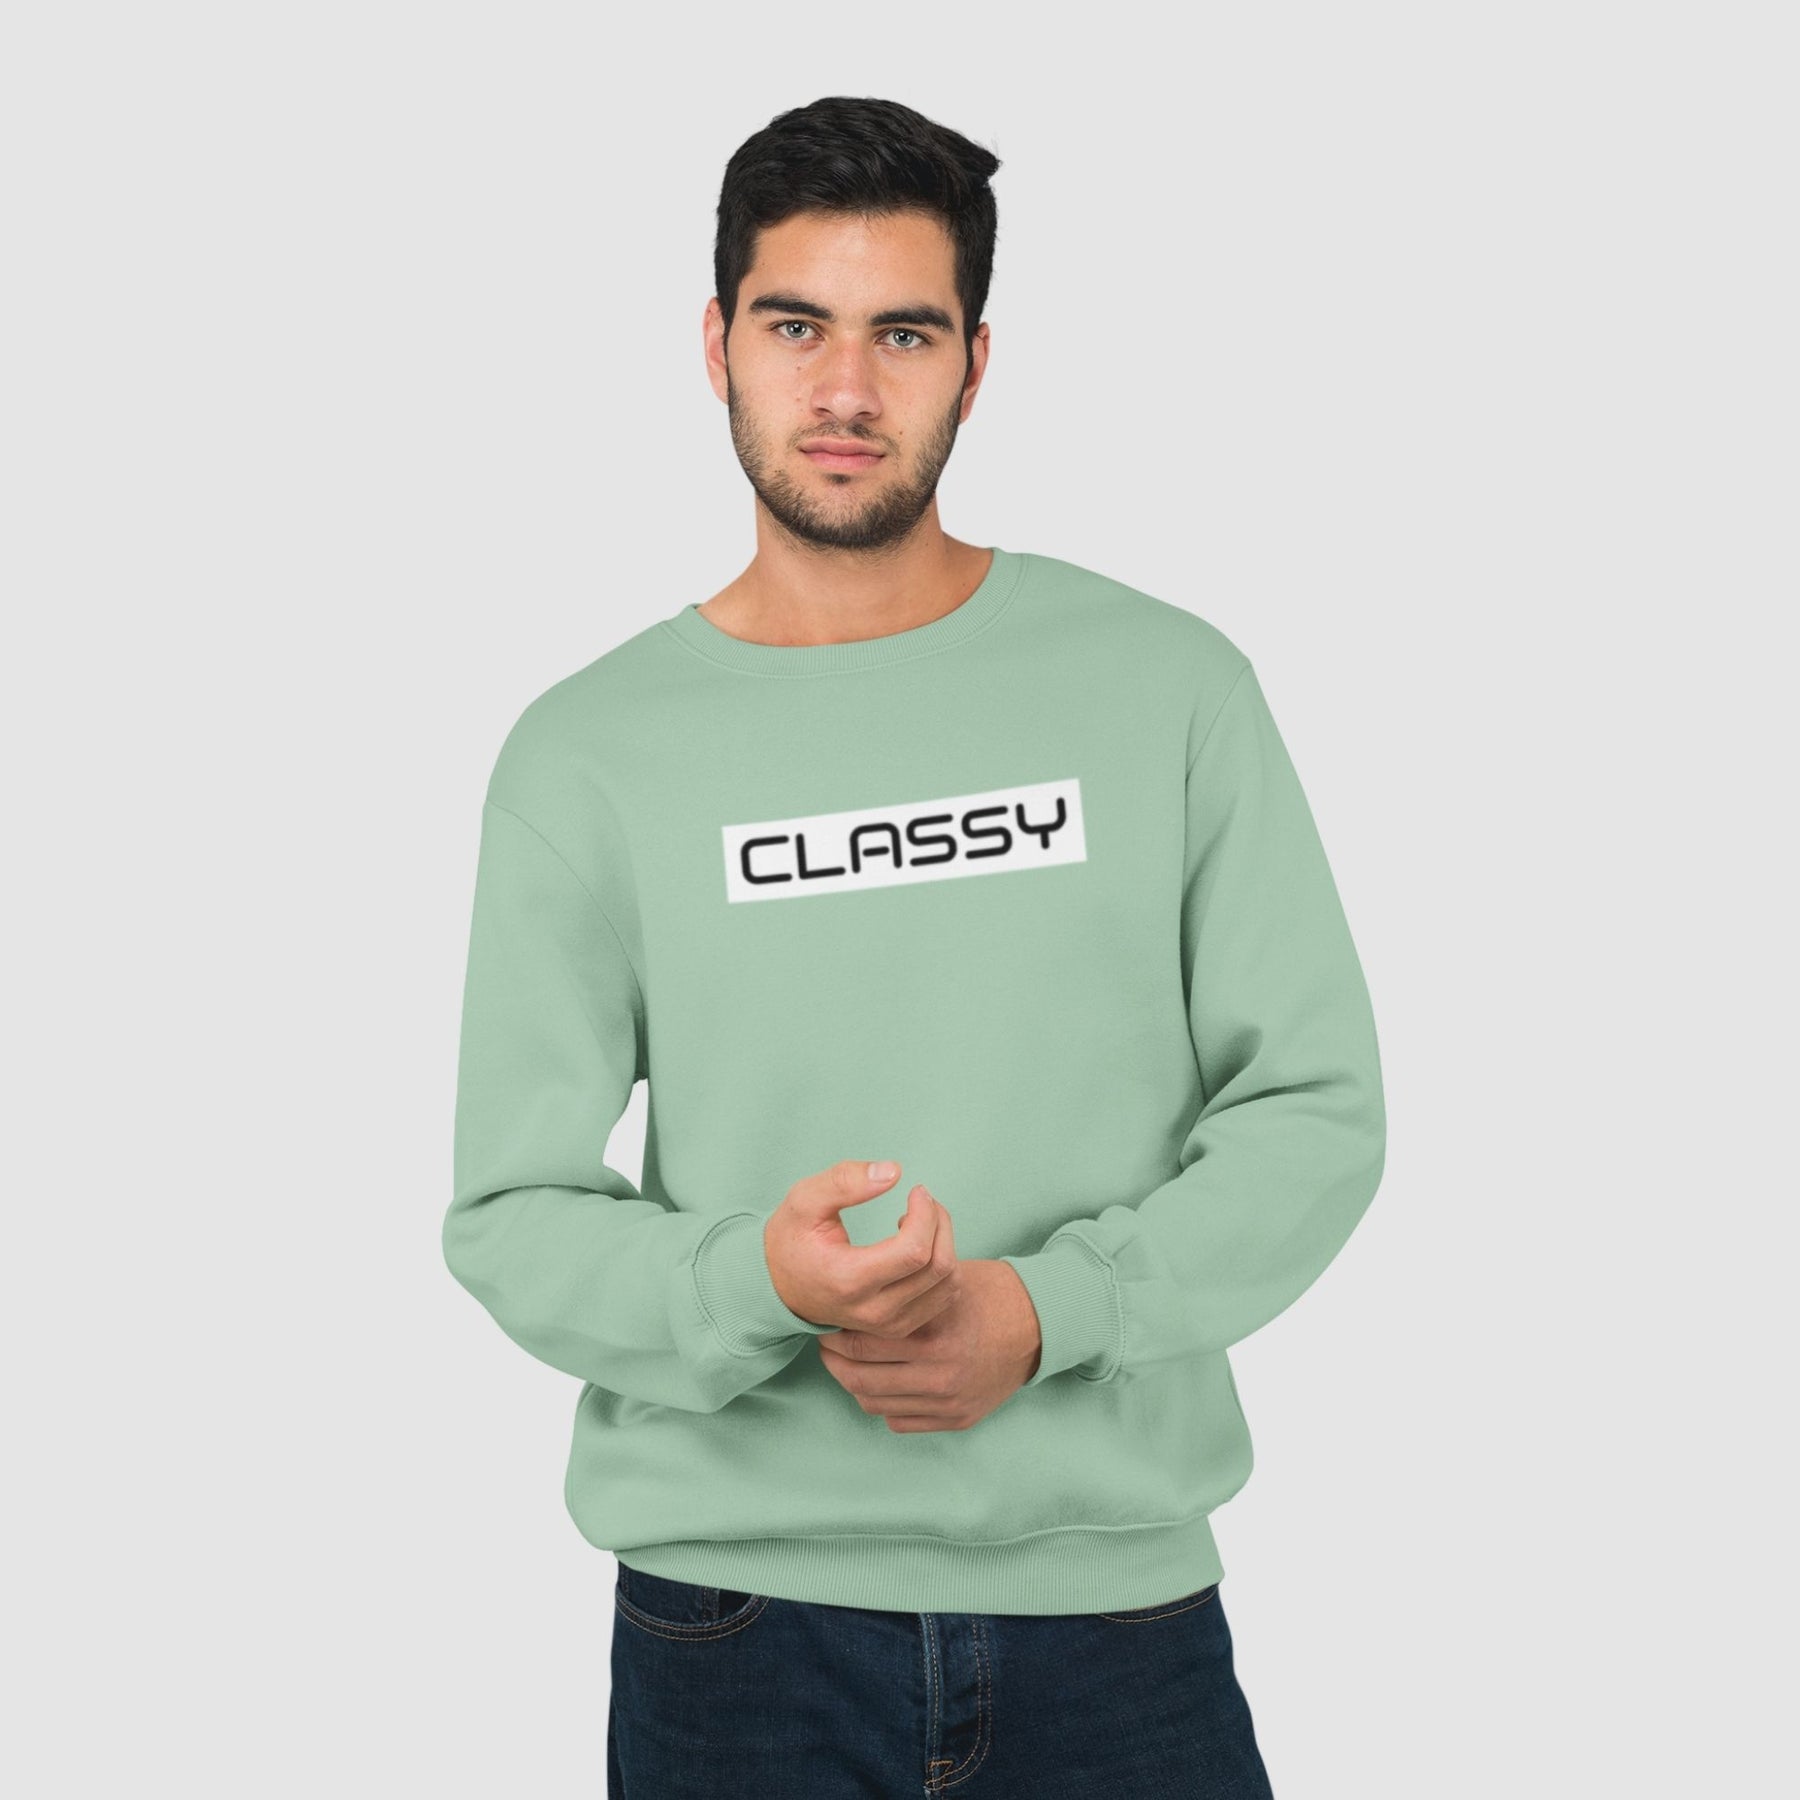 classy-cotton-printed-unisex-mint-men-model-sweatshirt-gogirgit-com